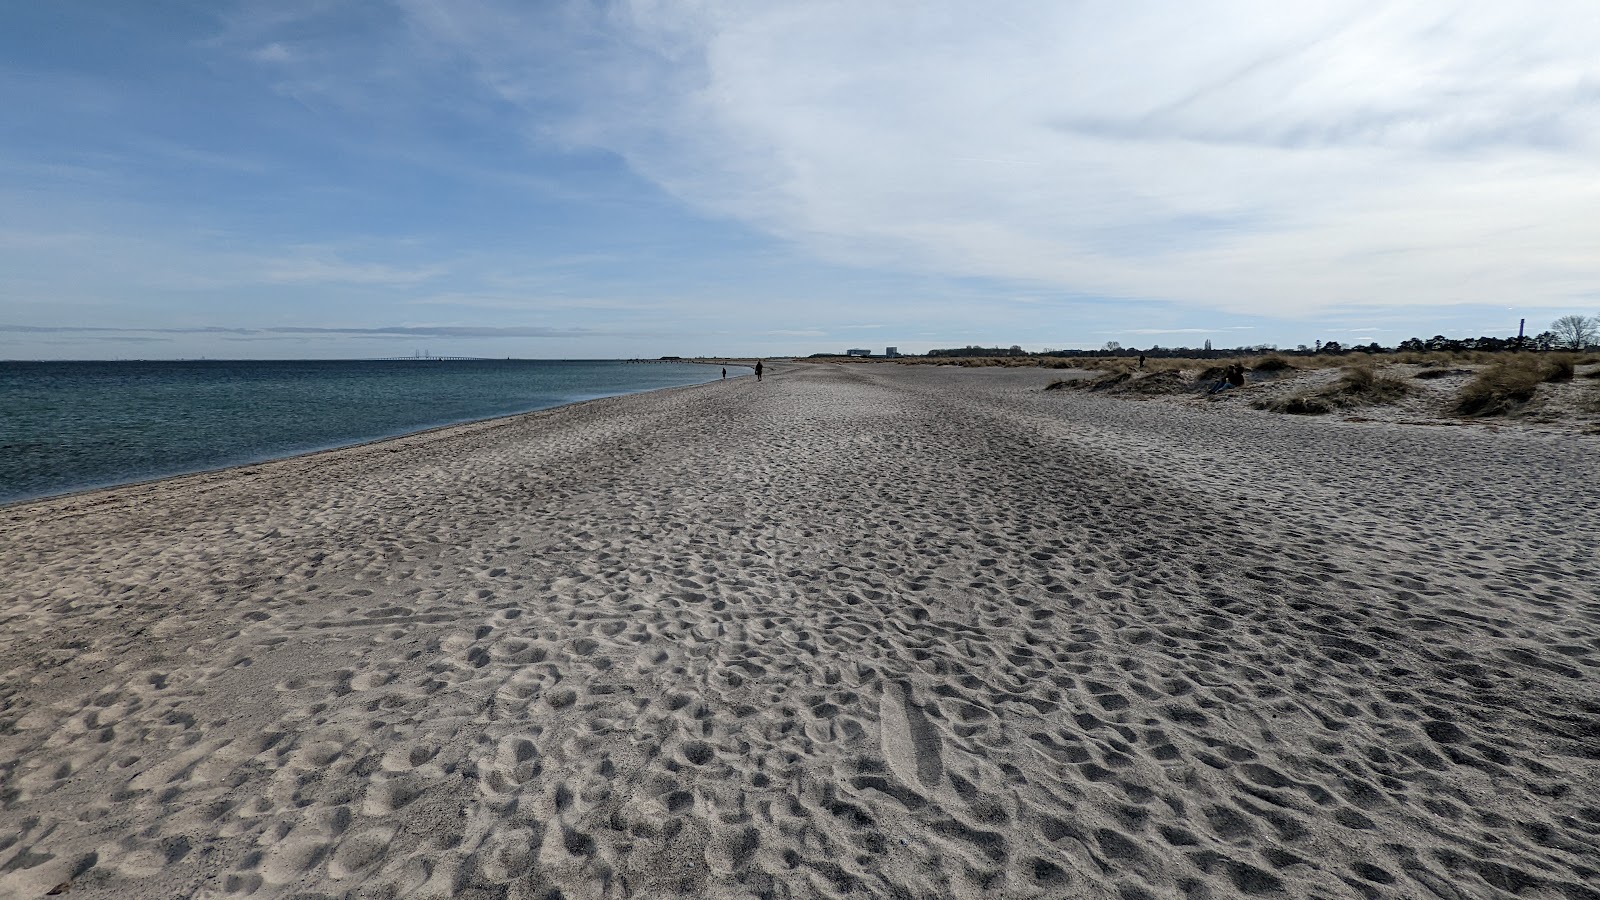 Foto de Amager Beach - lugar popular entre os apreciadores de relaxamento